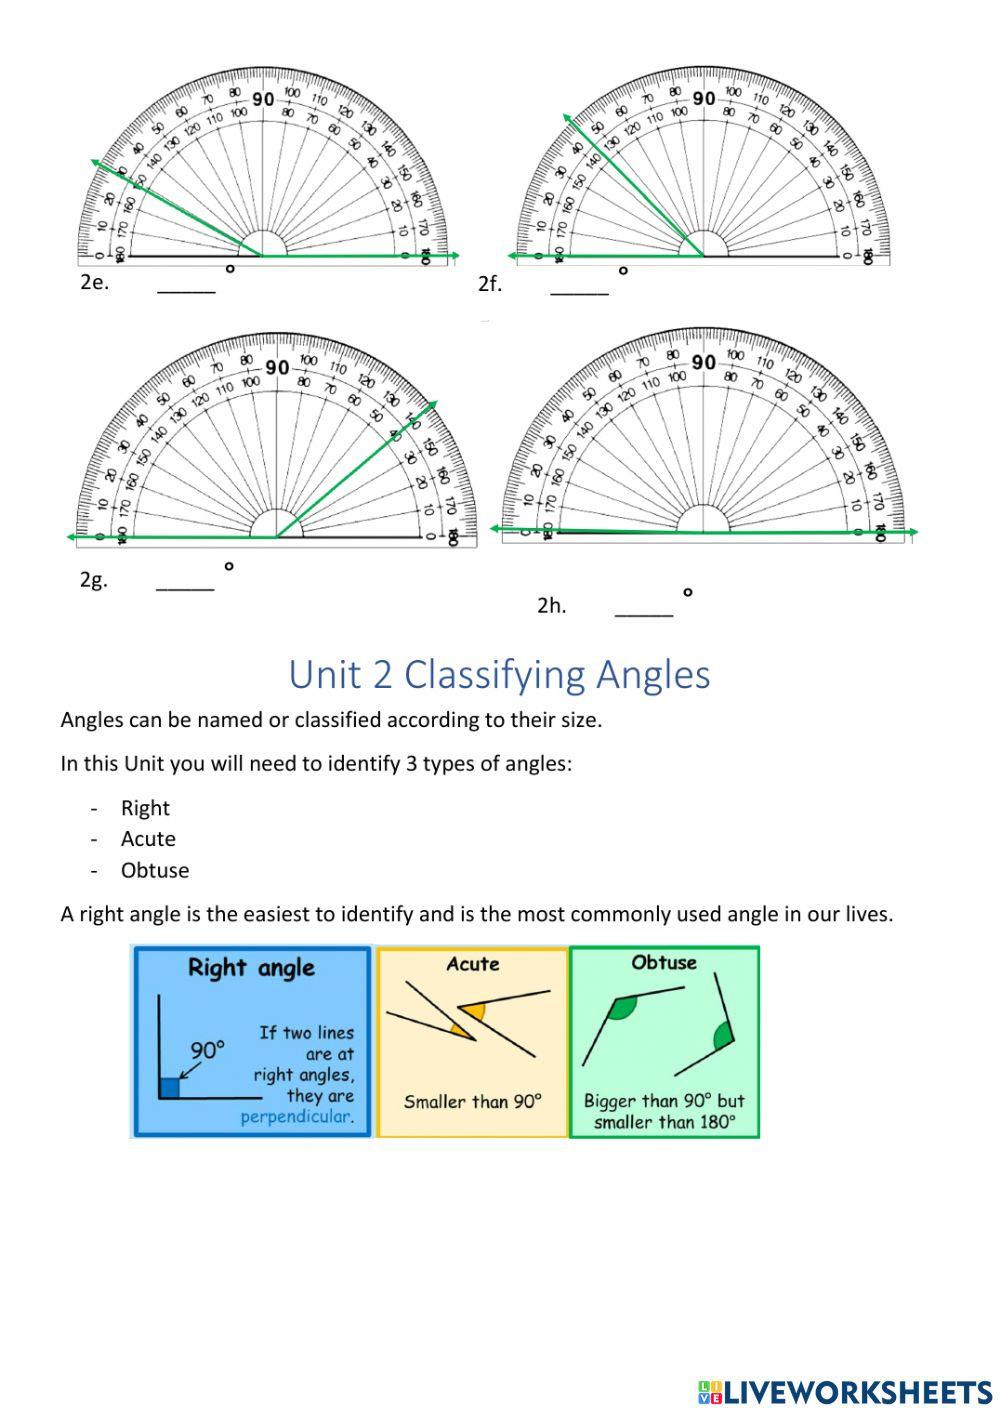 CHILL5 Math Angles Revision 1-3 Set 1